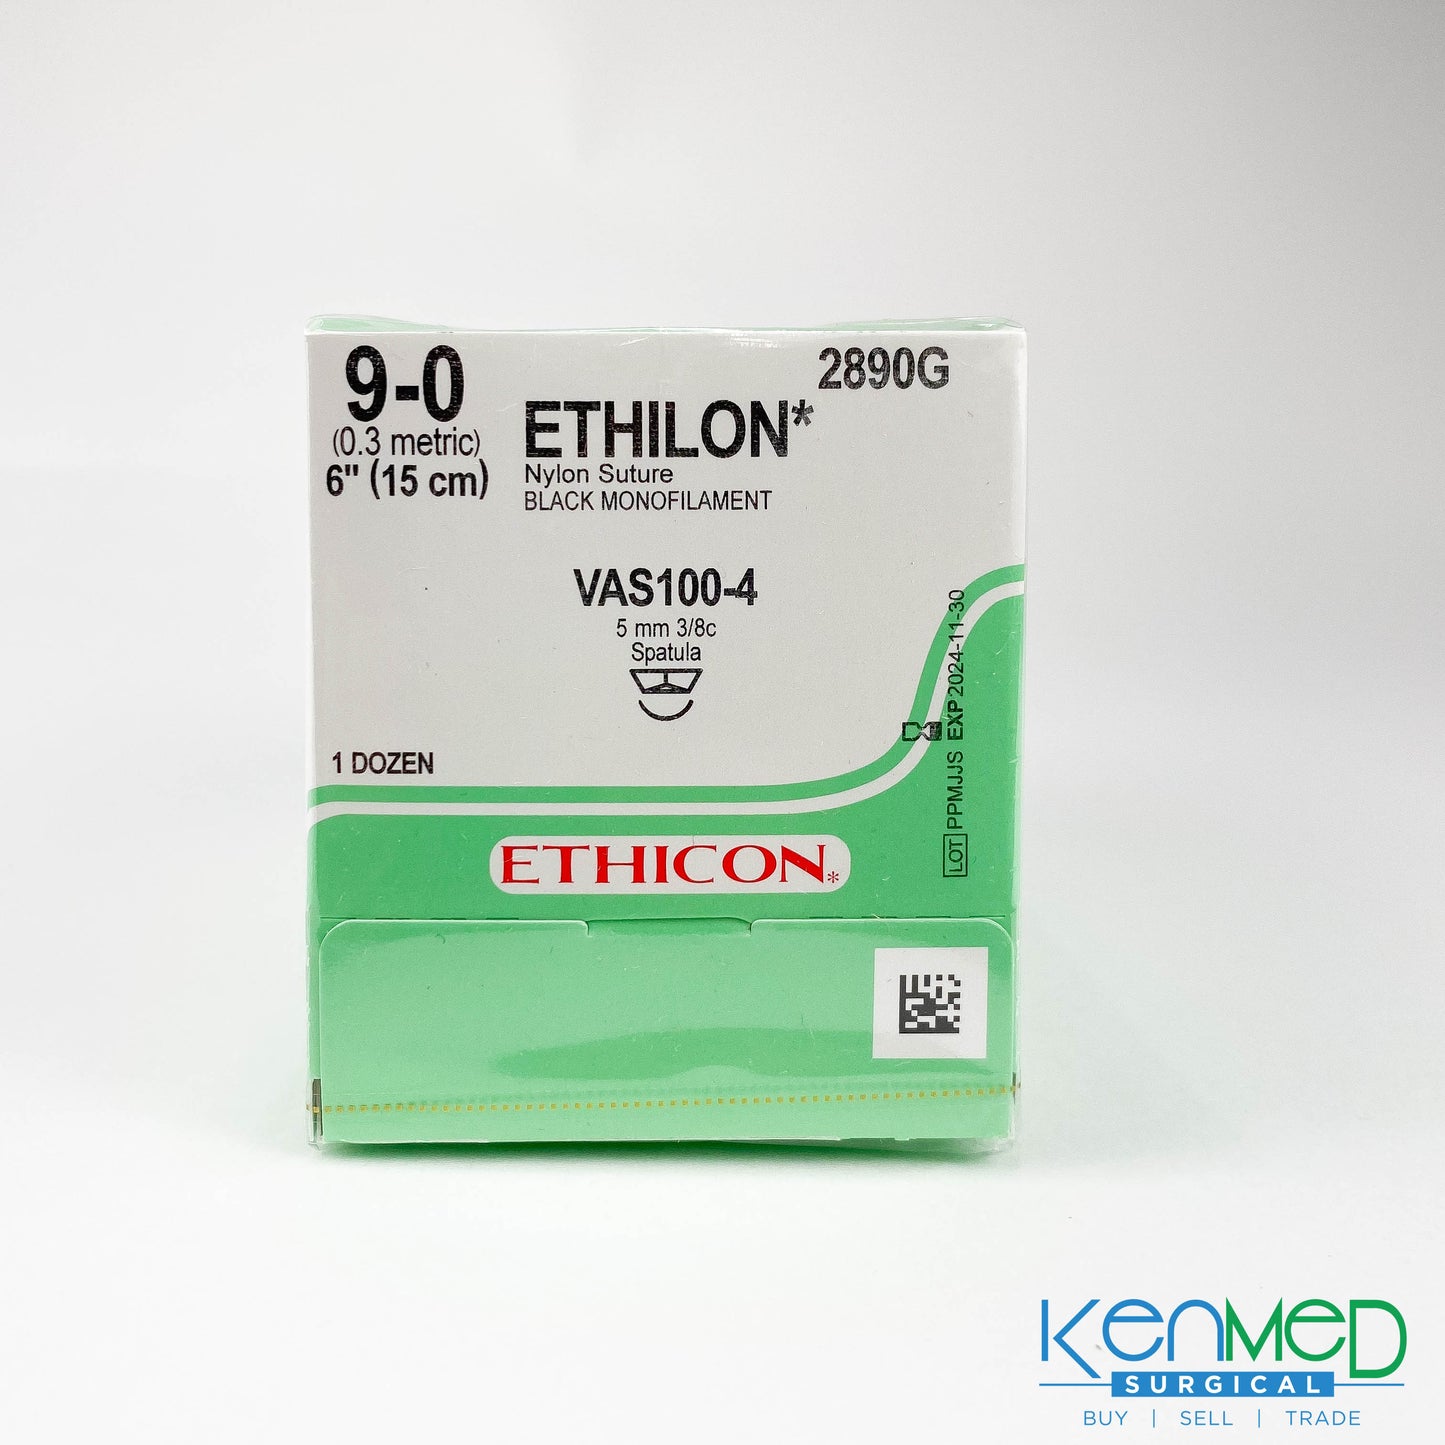 Ethicon 2890G Ethilon Nylon Suture Black Monofilament (EXP 11-30-2024)